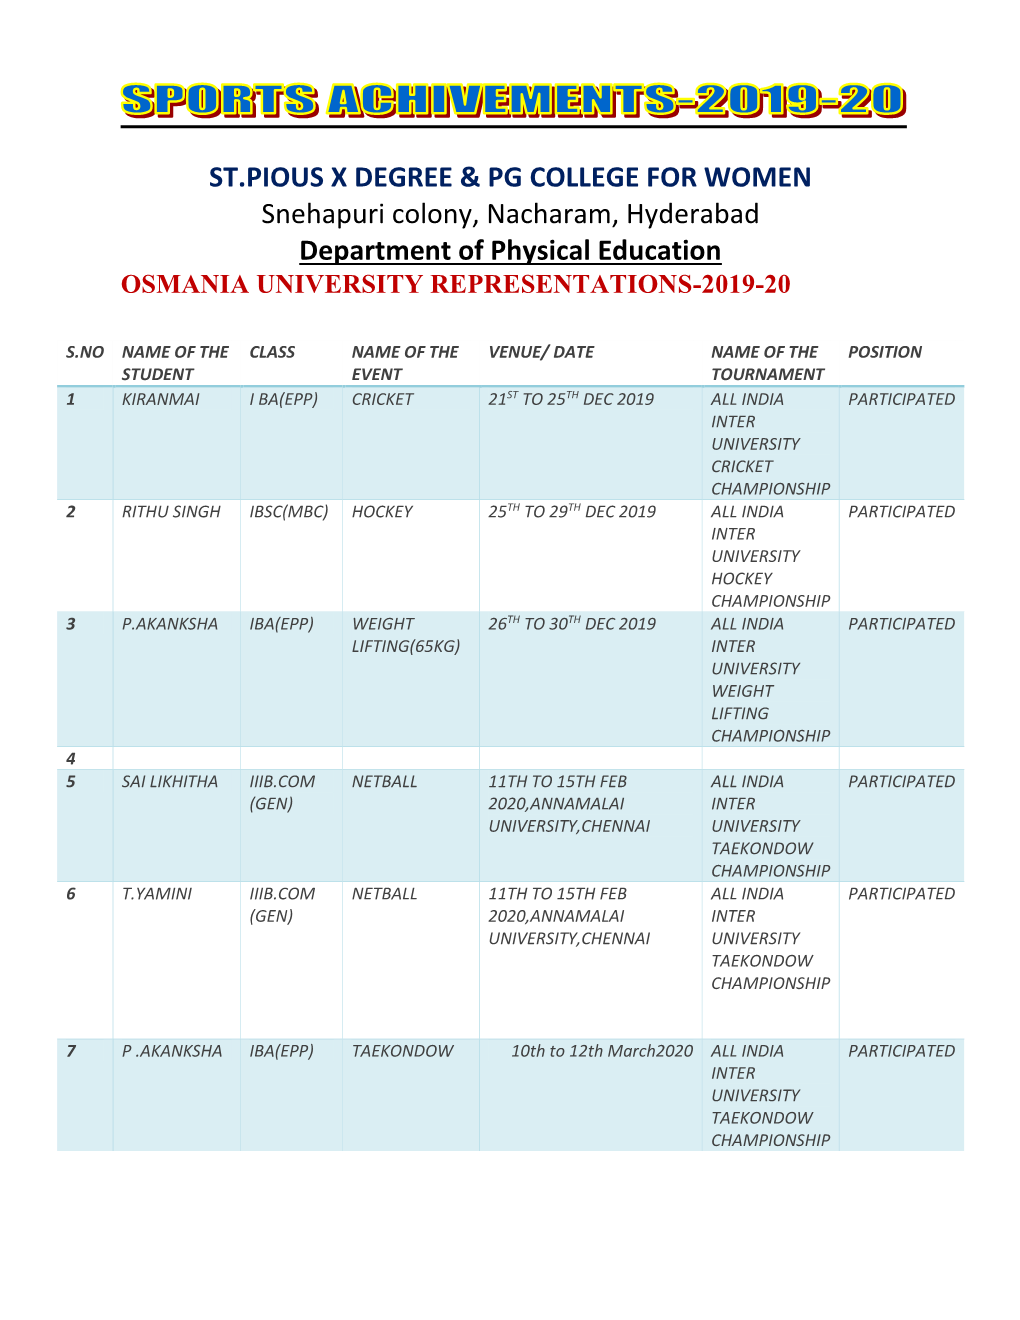 ST.PIOUS X DEGREE & PG COLLEGE for WOMEN Snehapuri